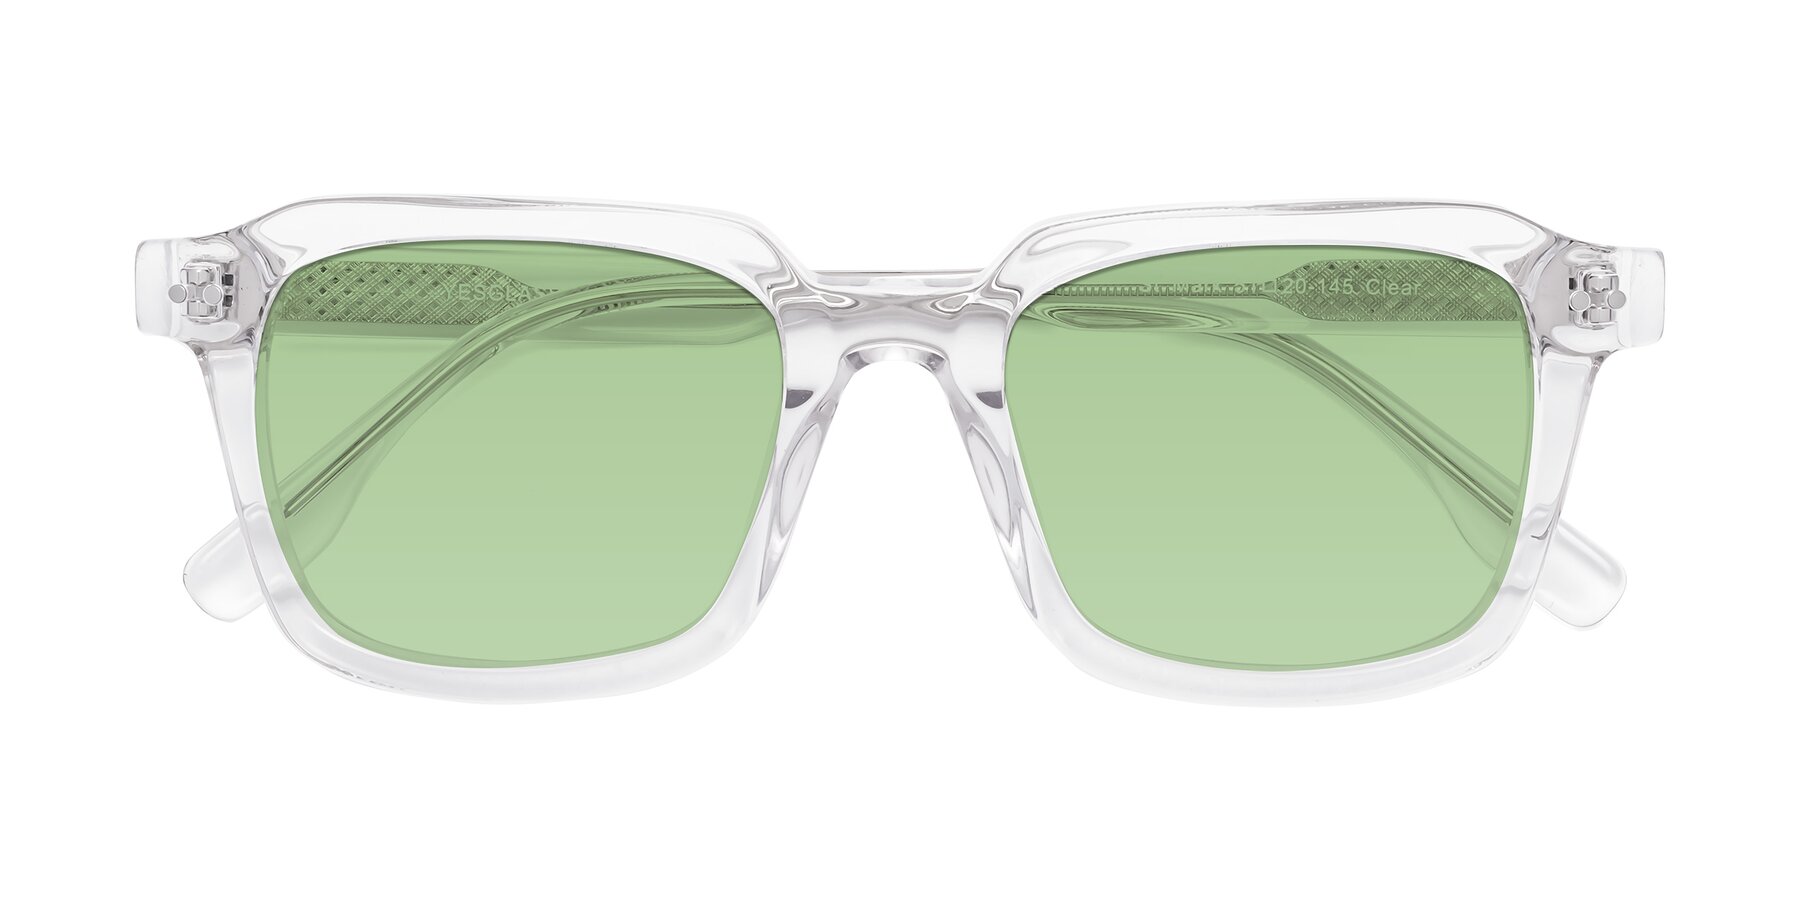 Square Tinted Full-Rim Sunglasses for Women and Men, Green